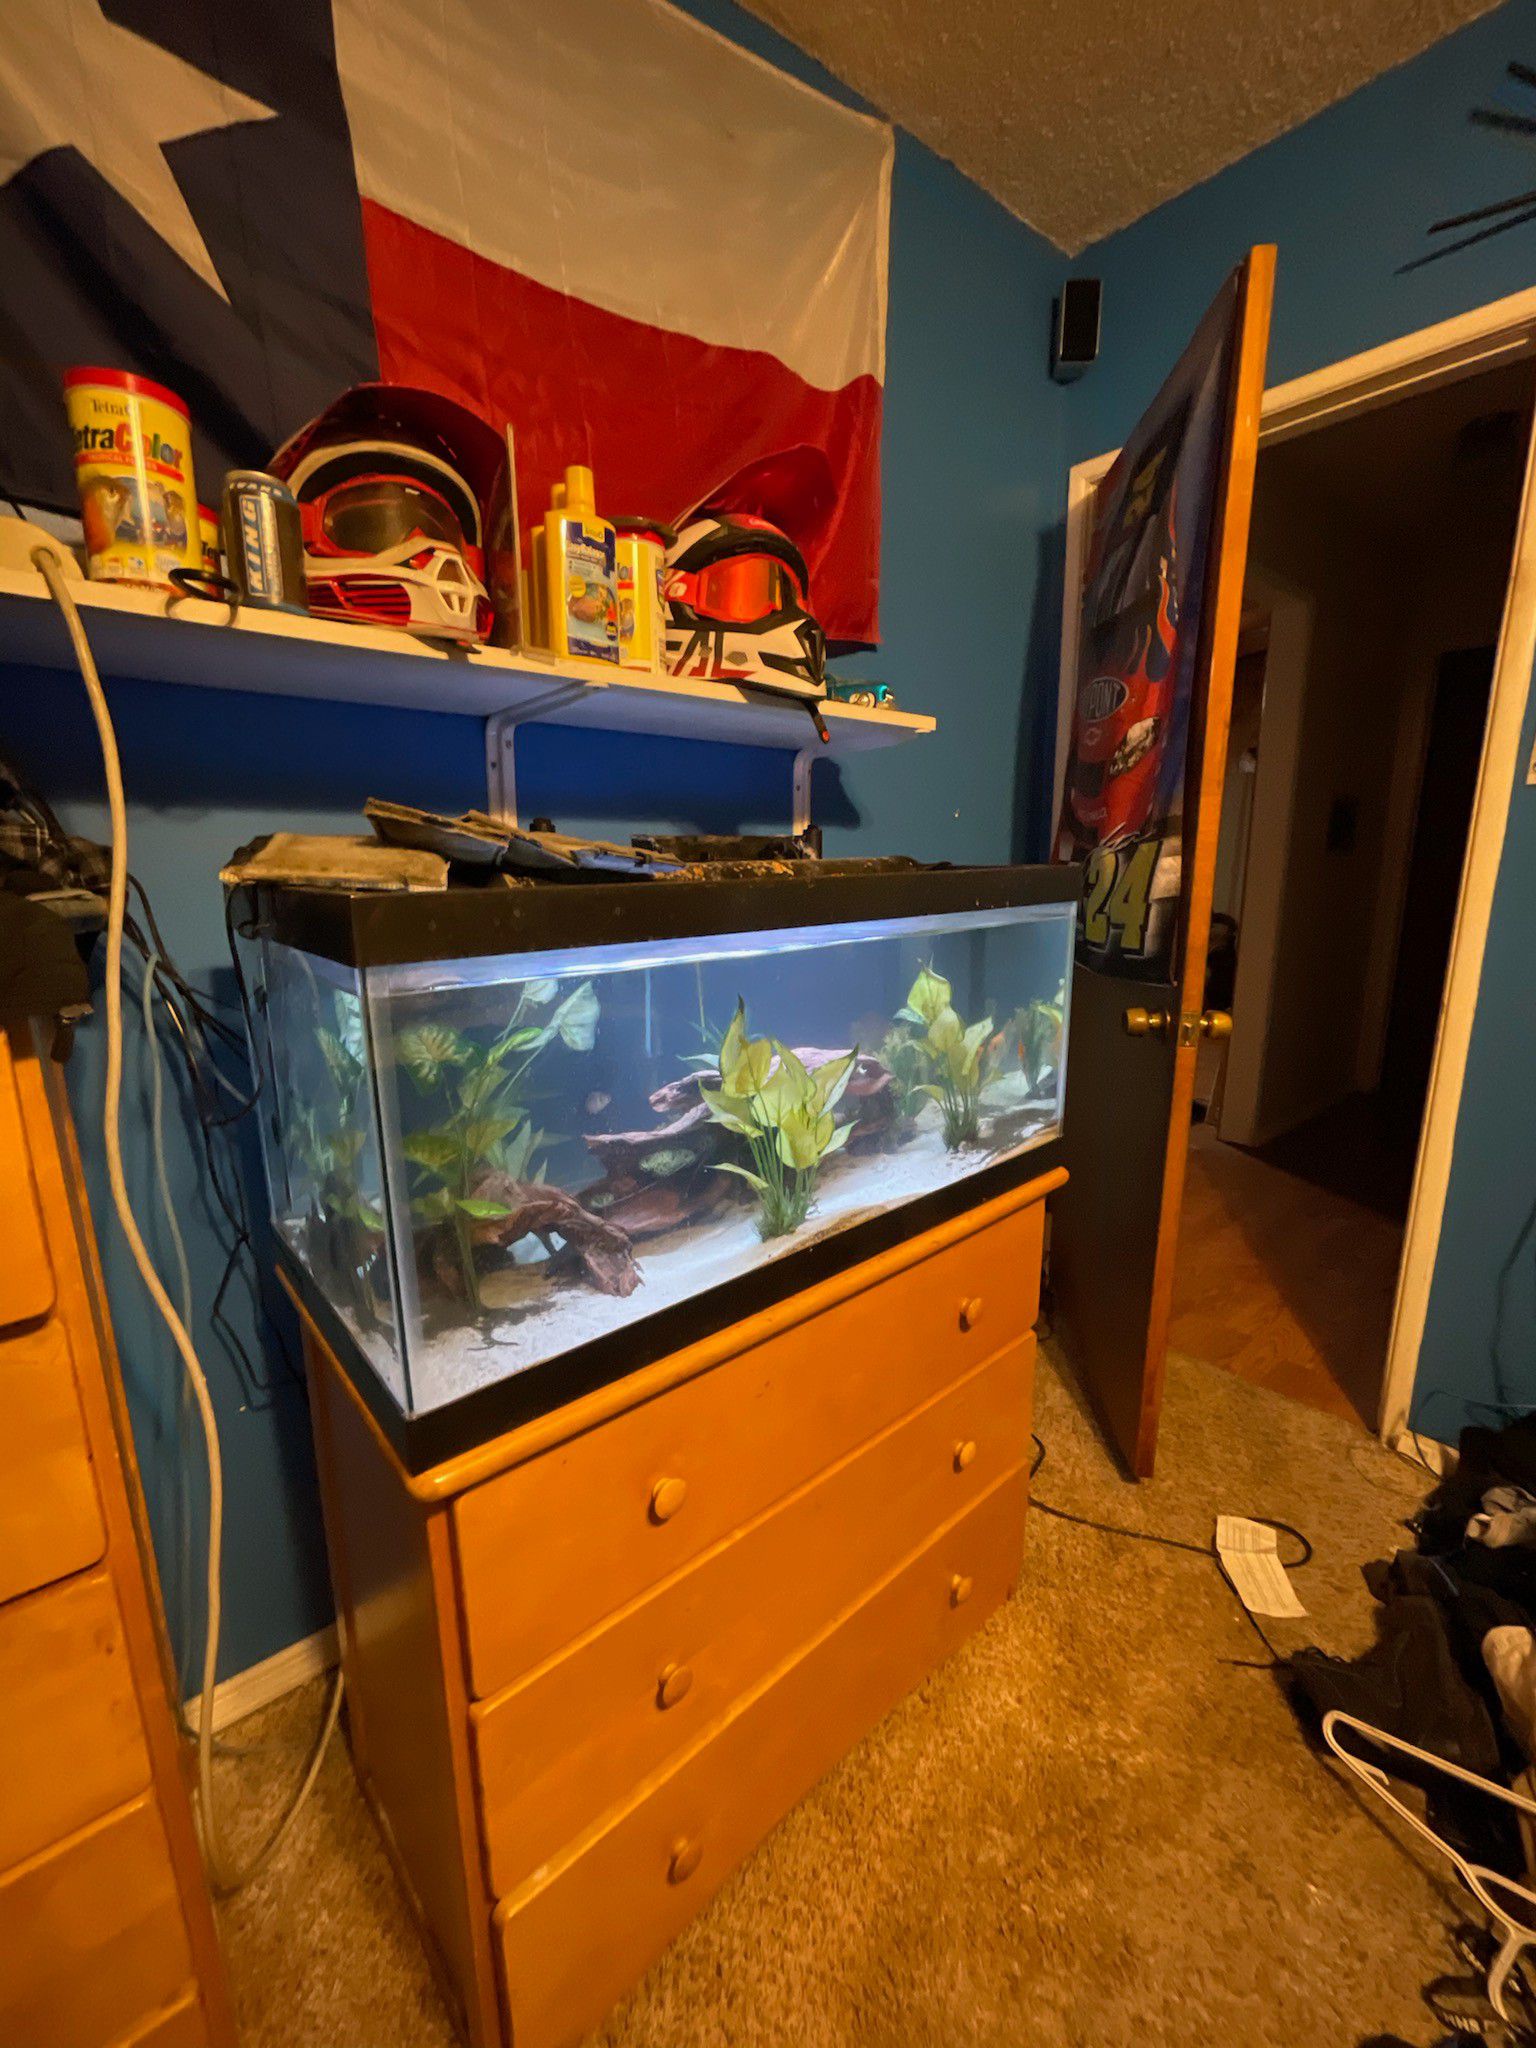 40 gallon fish tank